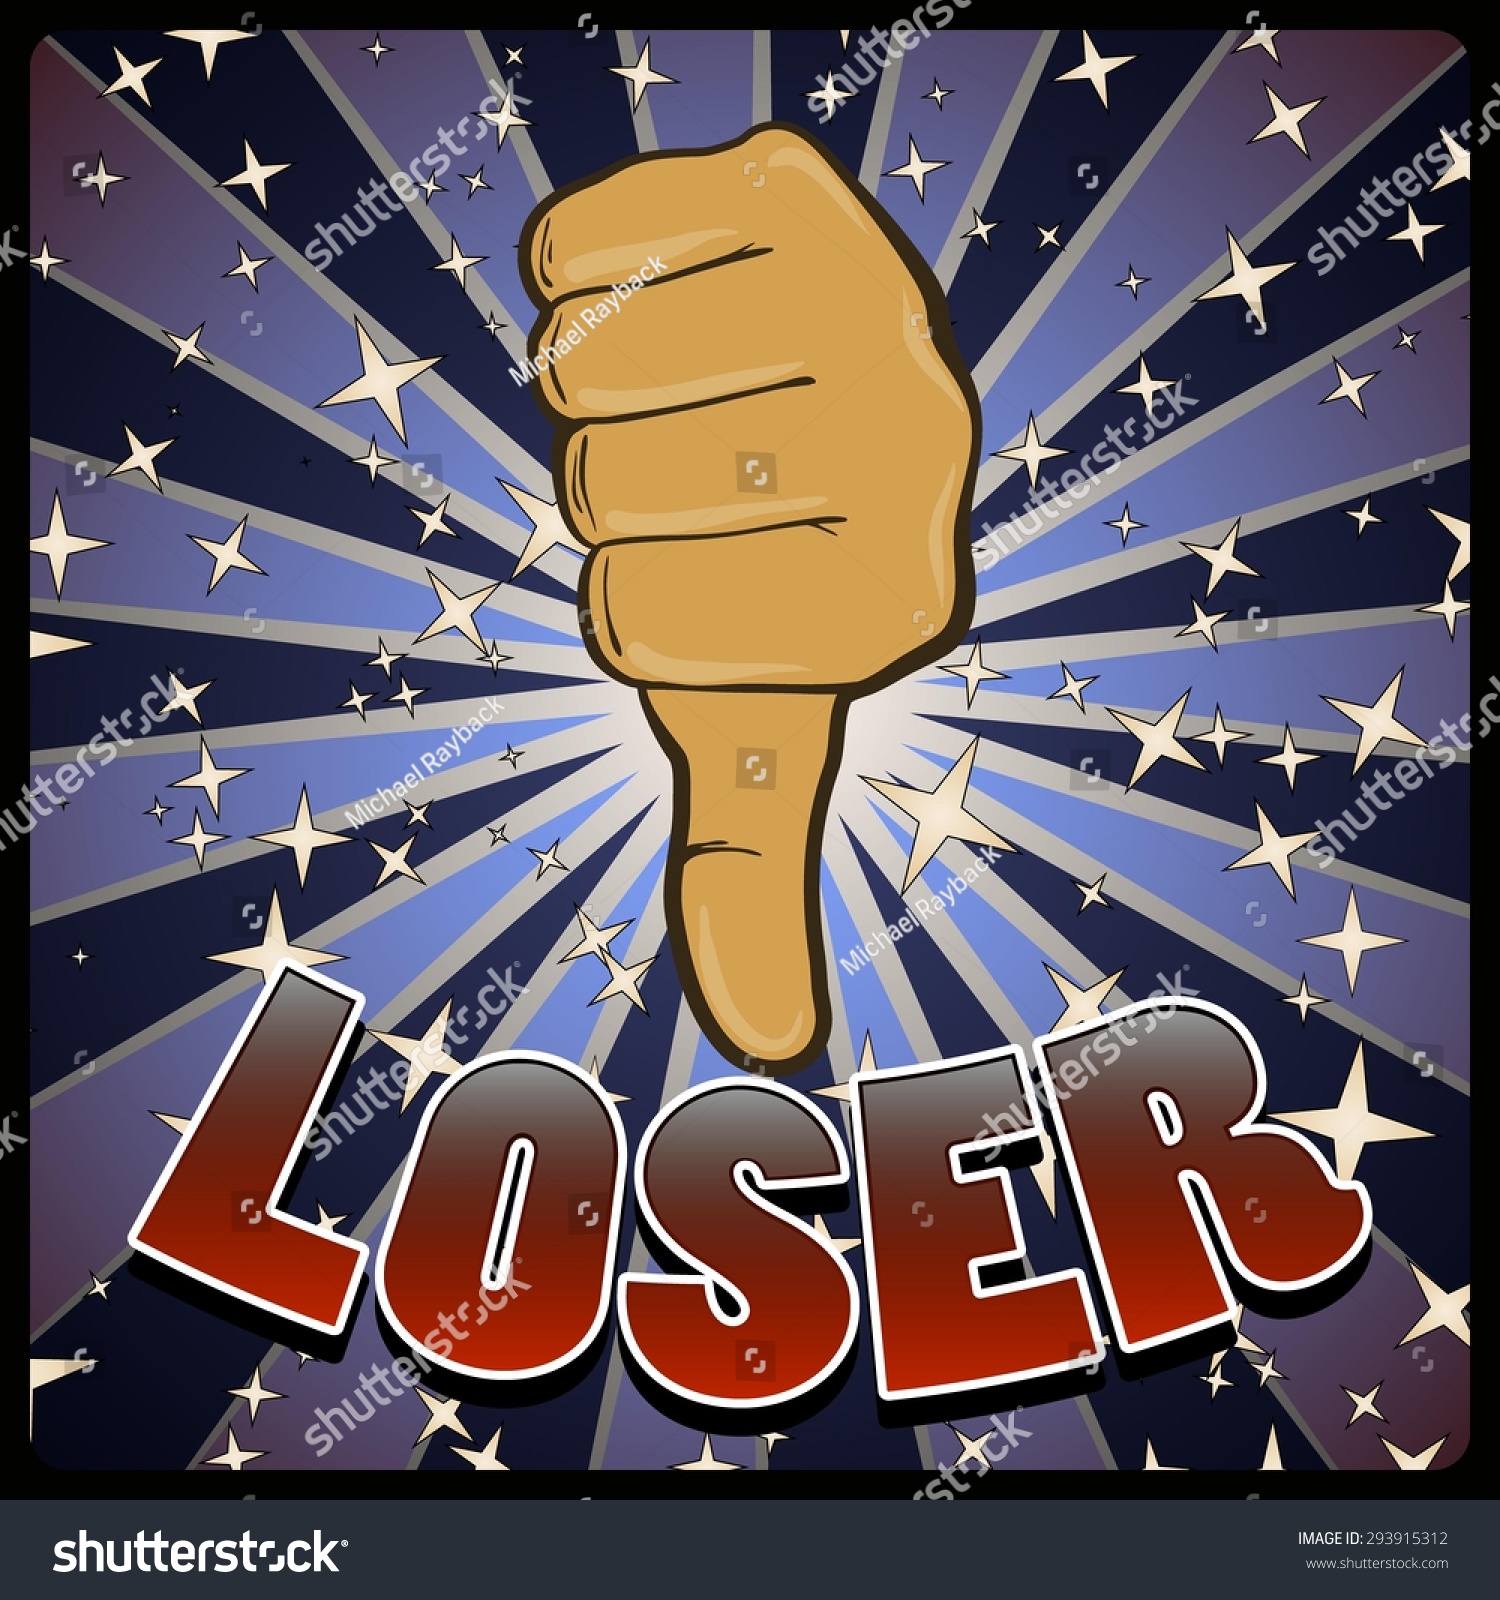 Loser Thumbs Down Vector Illustration - 293915312 : Shutterstock